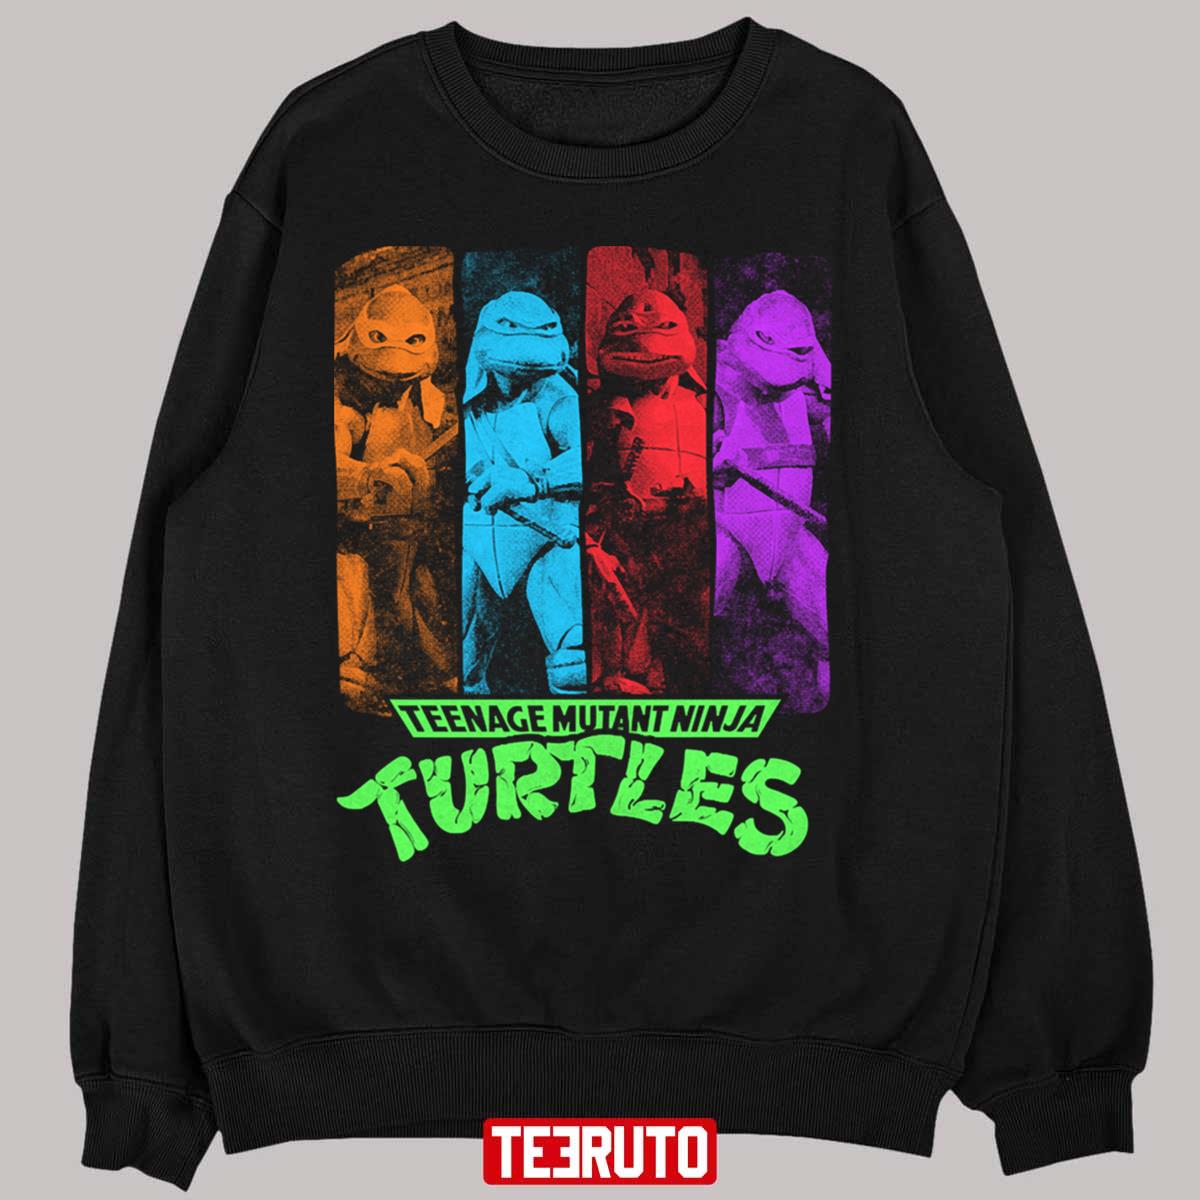 https://teeruto.com/wp-content/uploads/2022/11/heroes-in-a-half-shell-dark-teenage-mutant-ninja-turtles-unisex-tshirtoue7k.jpg